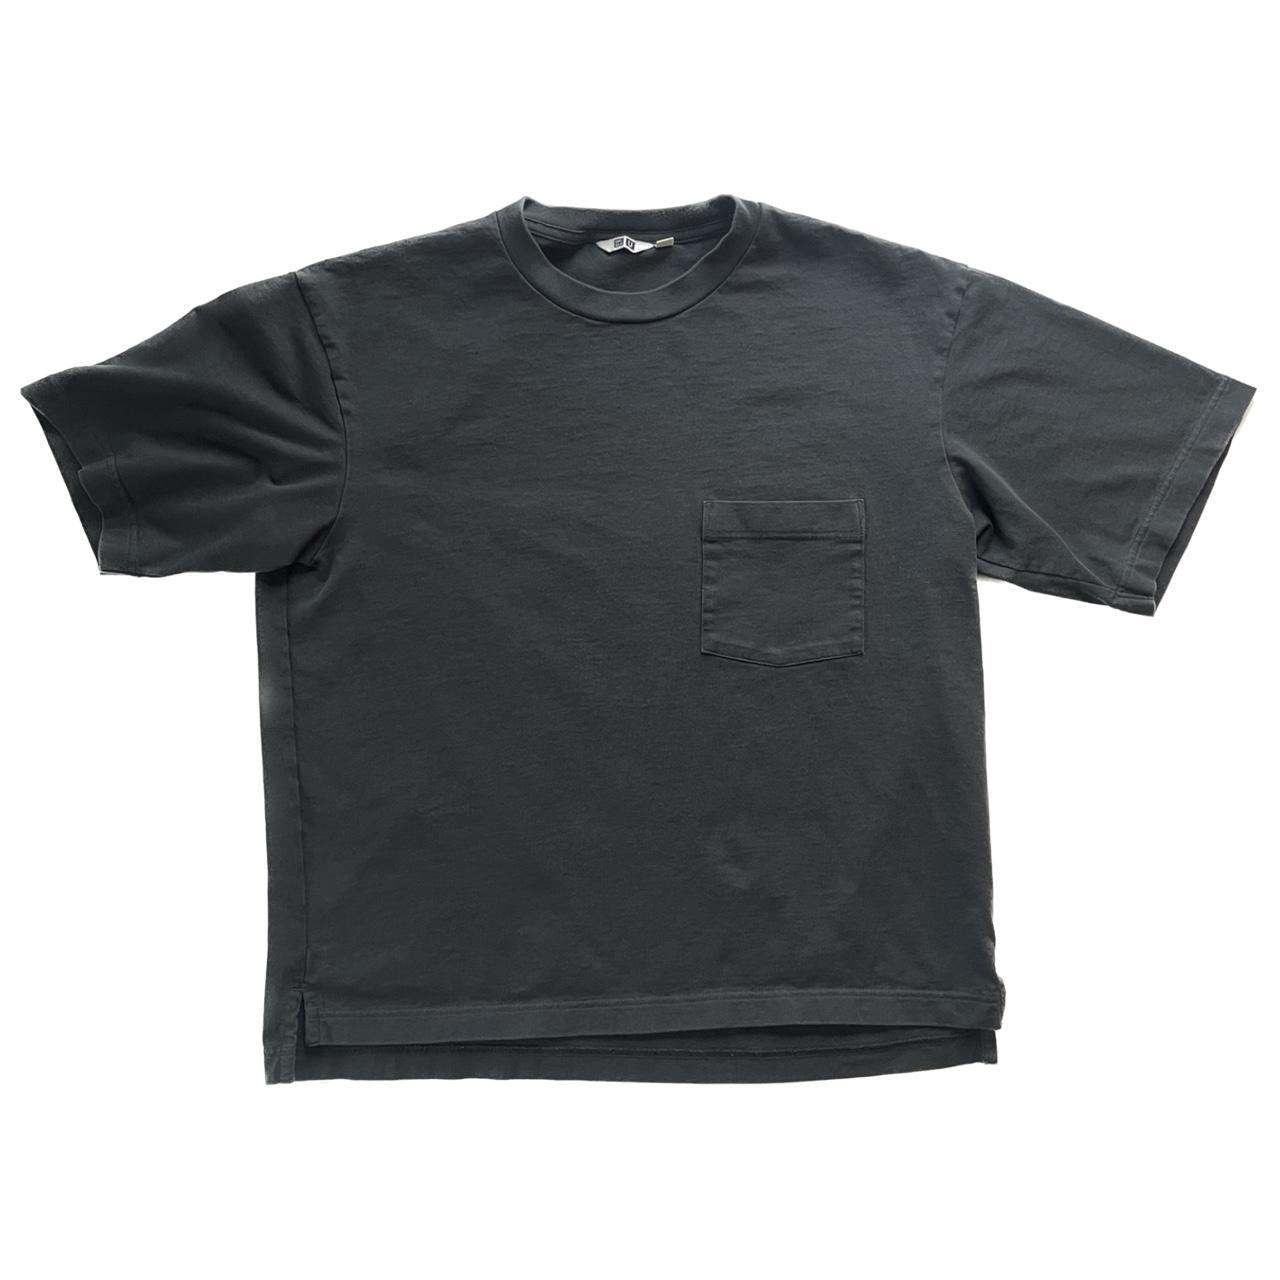 Uniqlo: U Pocket T-Shirt // Tee really nice Boxy fit... - Depop